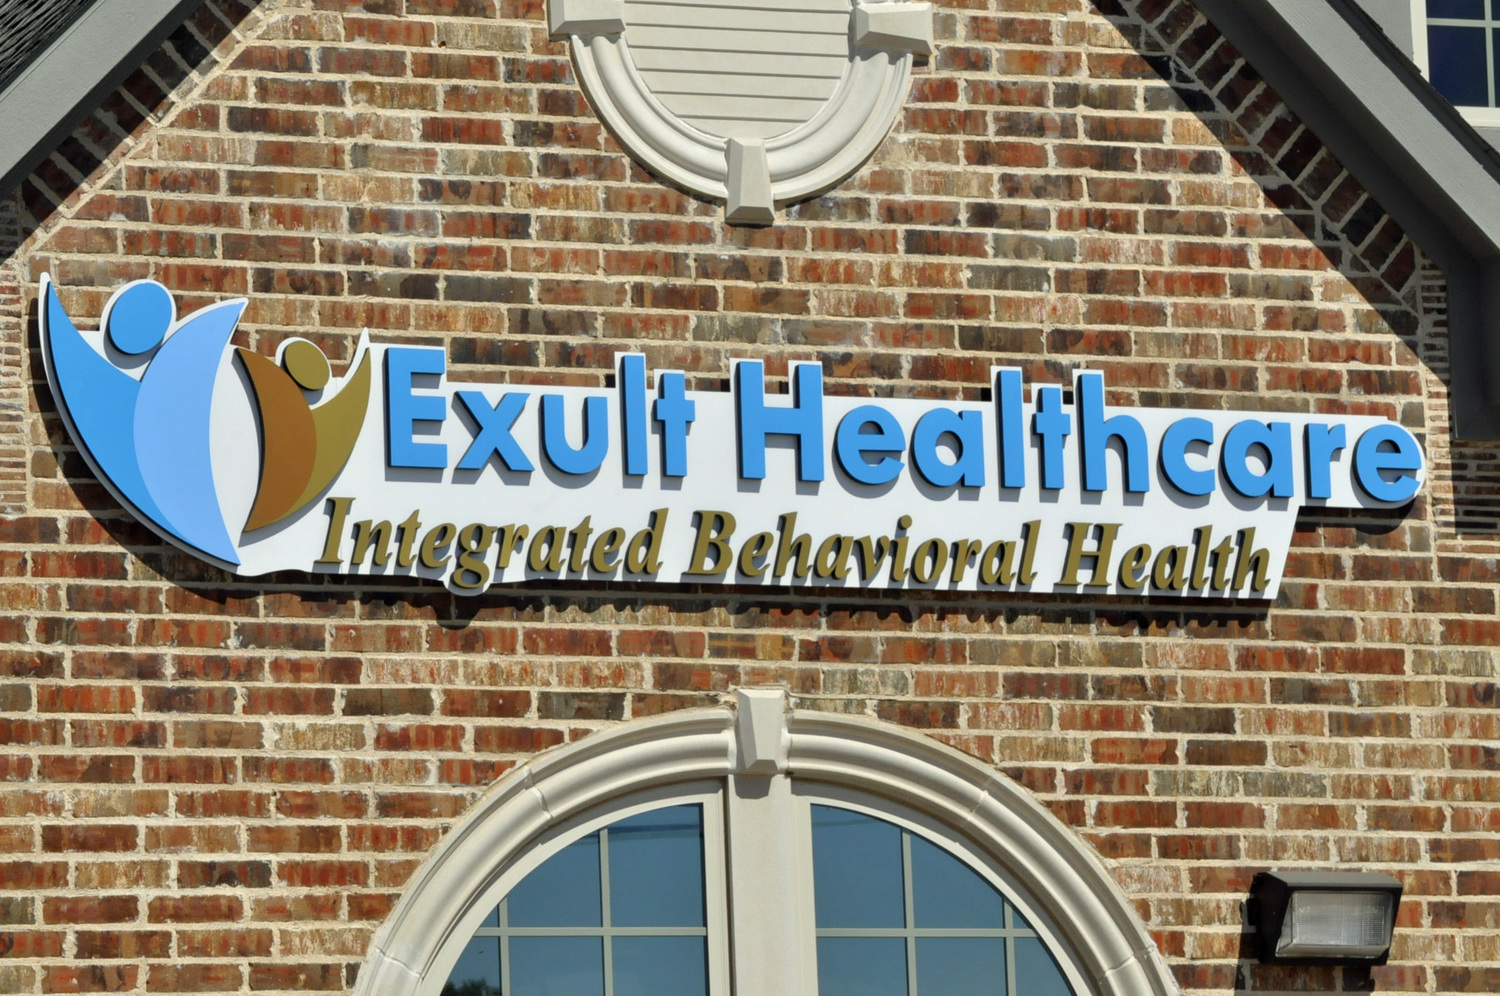 Gallery Photo of Exult Healthcare's McKinney Location